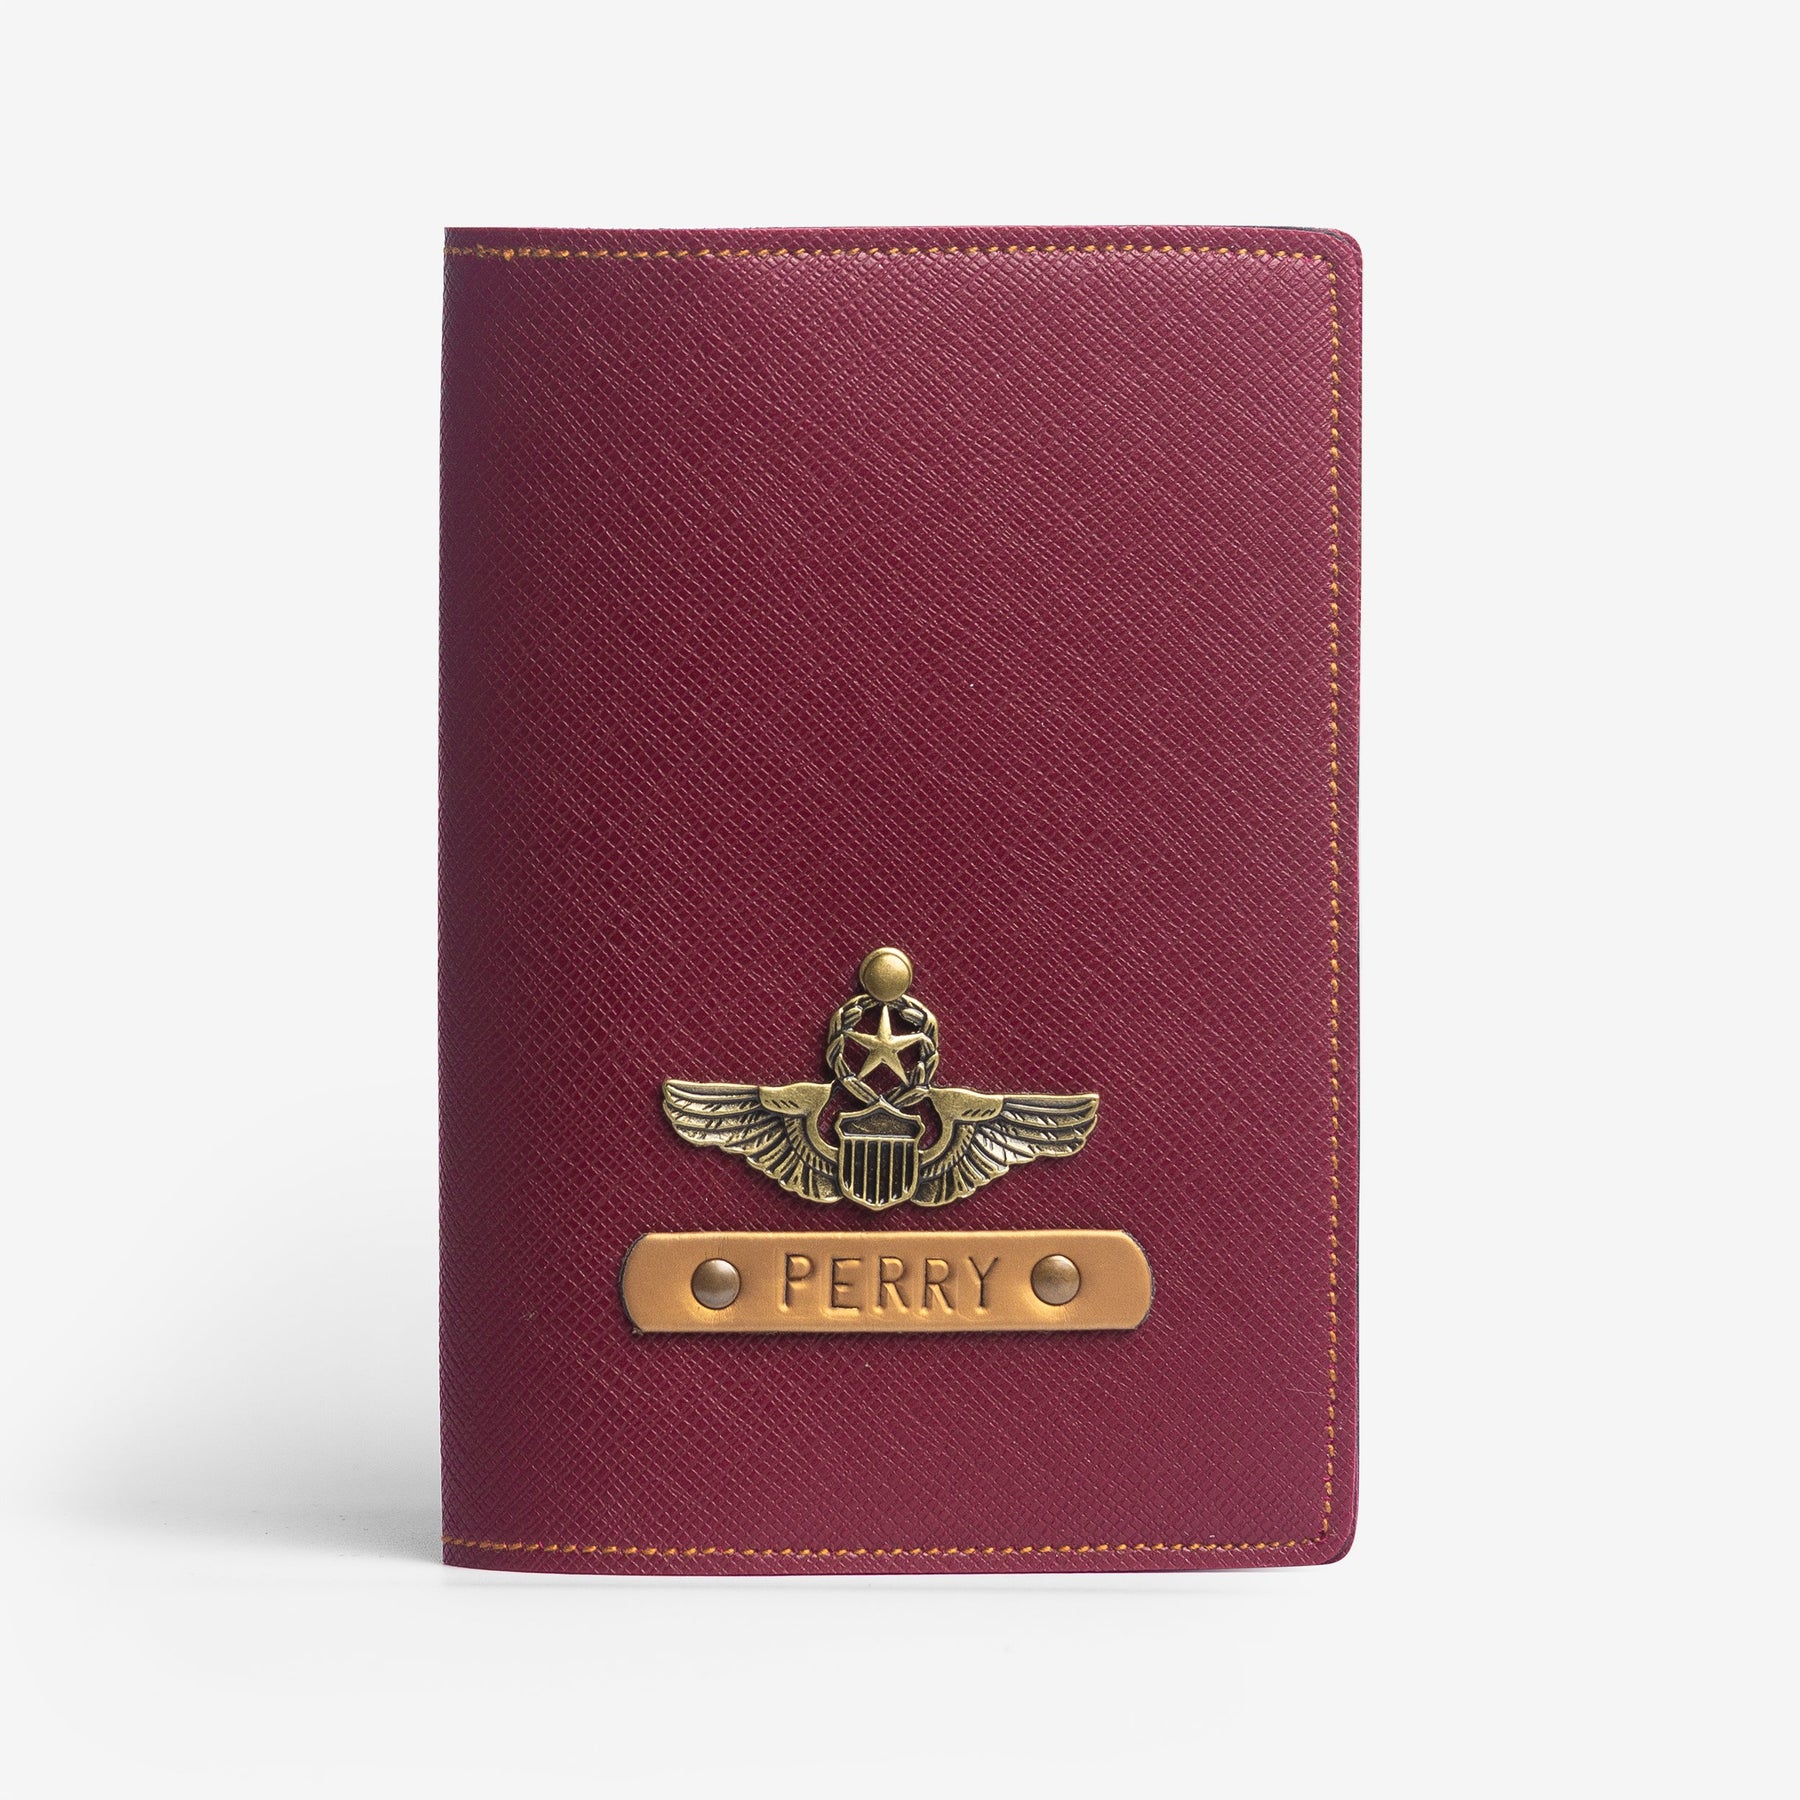 Personalized Passport Cover - Wine